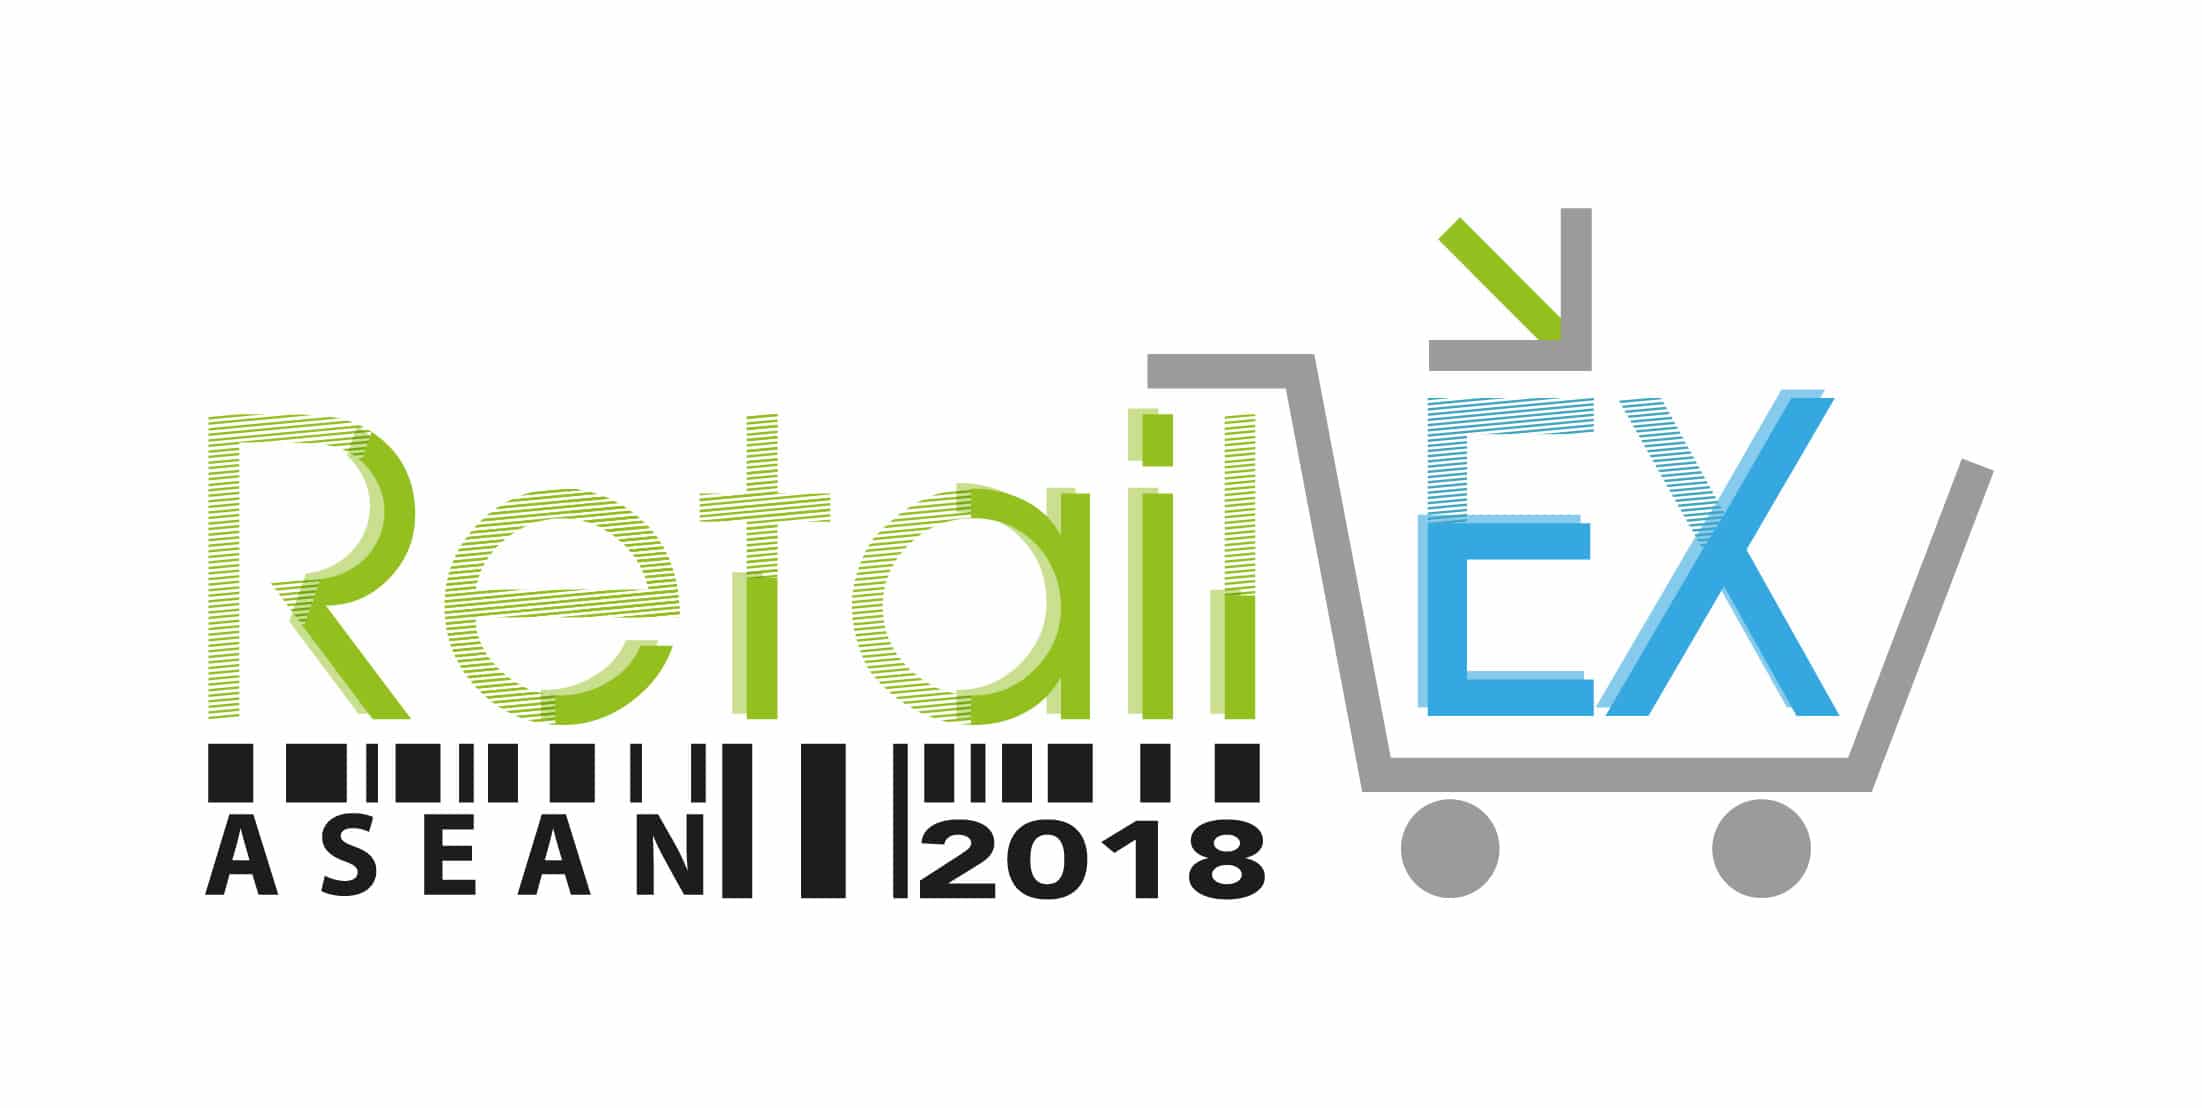 RetailEx Asean 2018